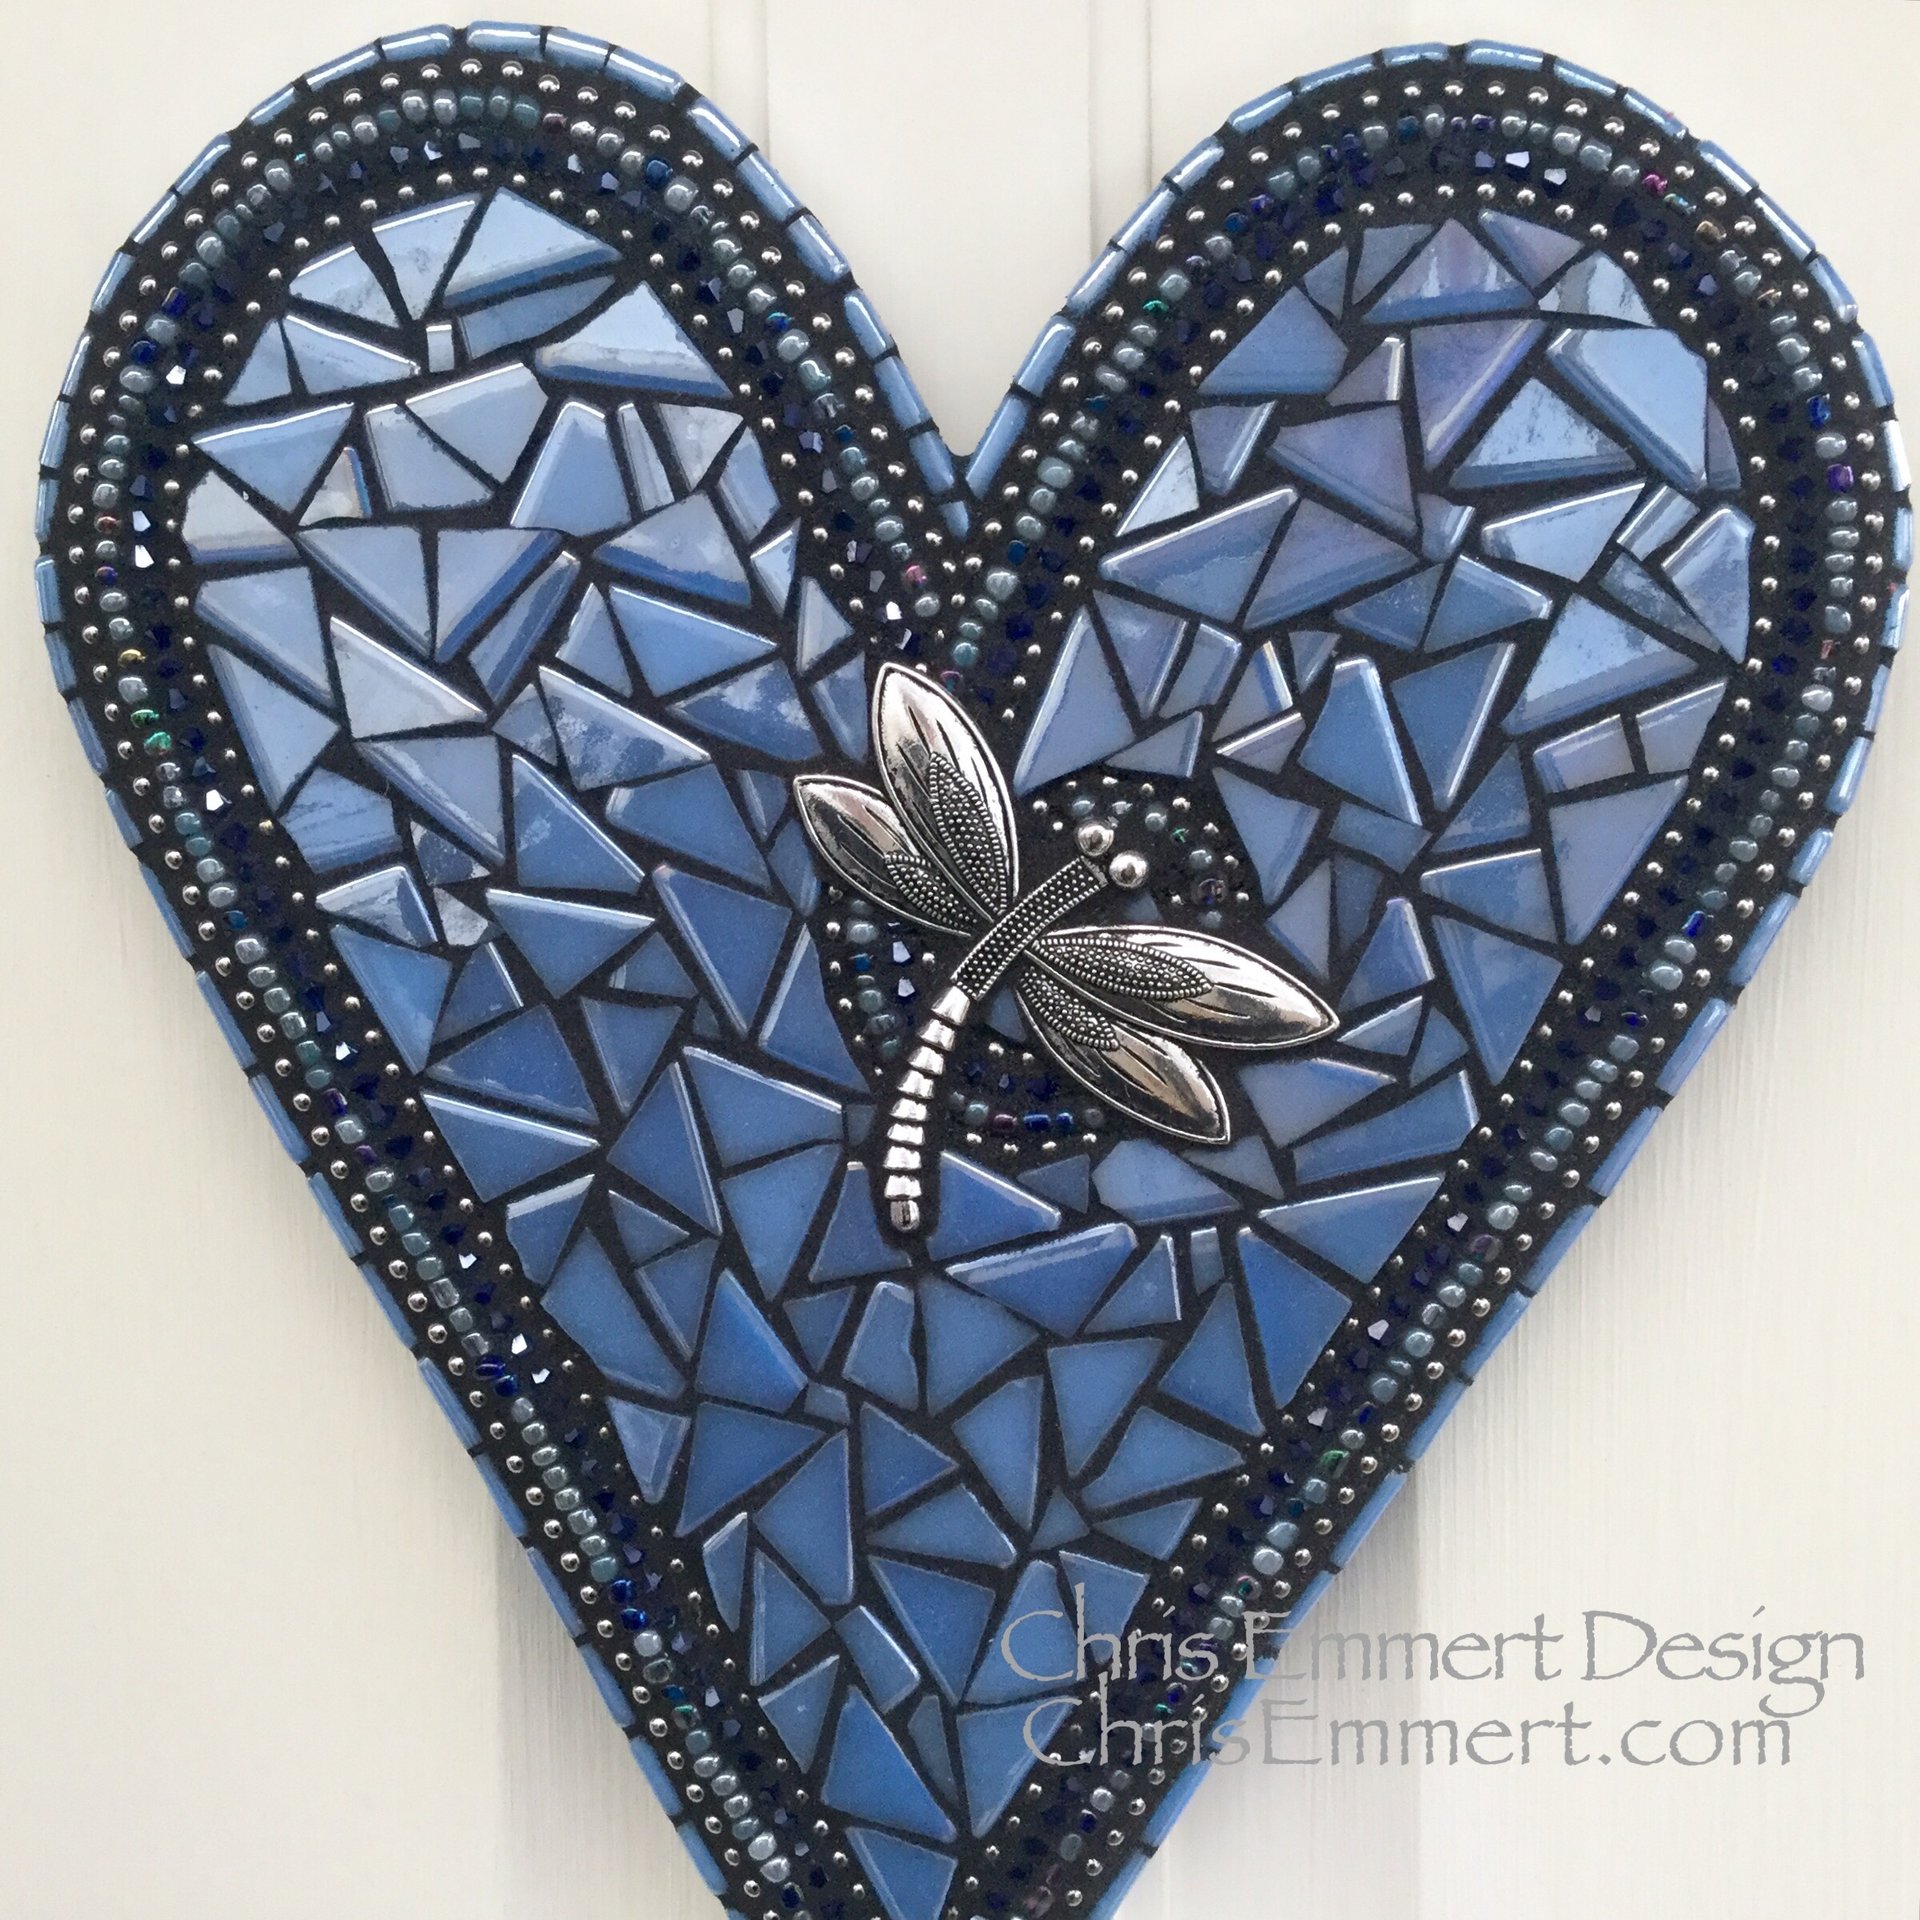 Wall Hanging Heart, Blue ( Glow in the Dark) Heart -Mosaic / Porch Decor, Wall Decor